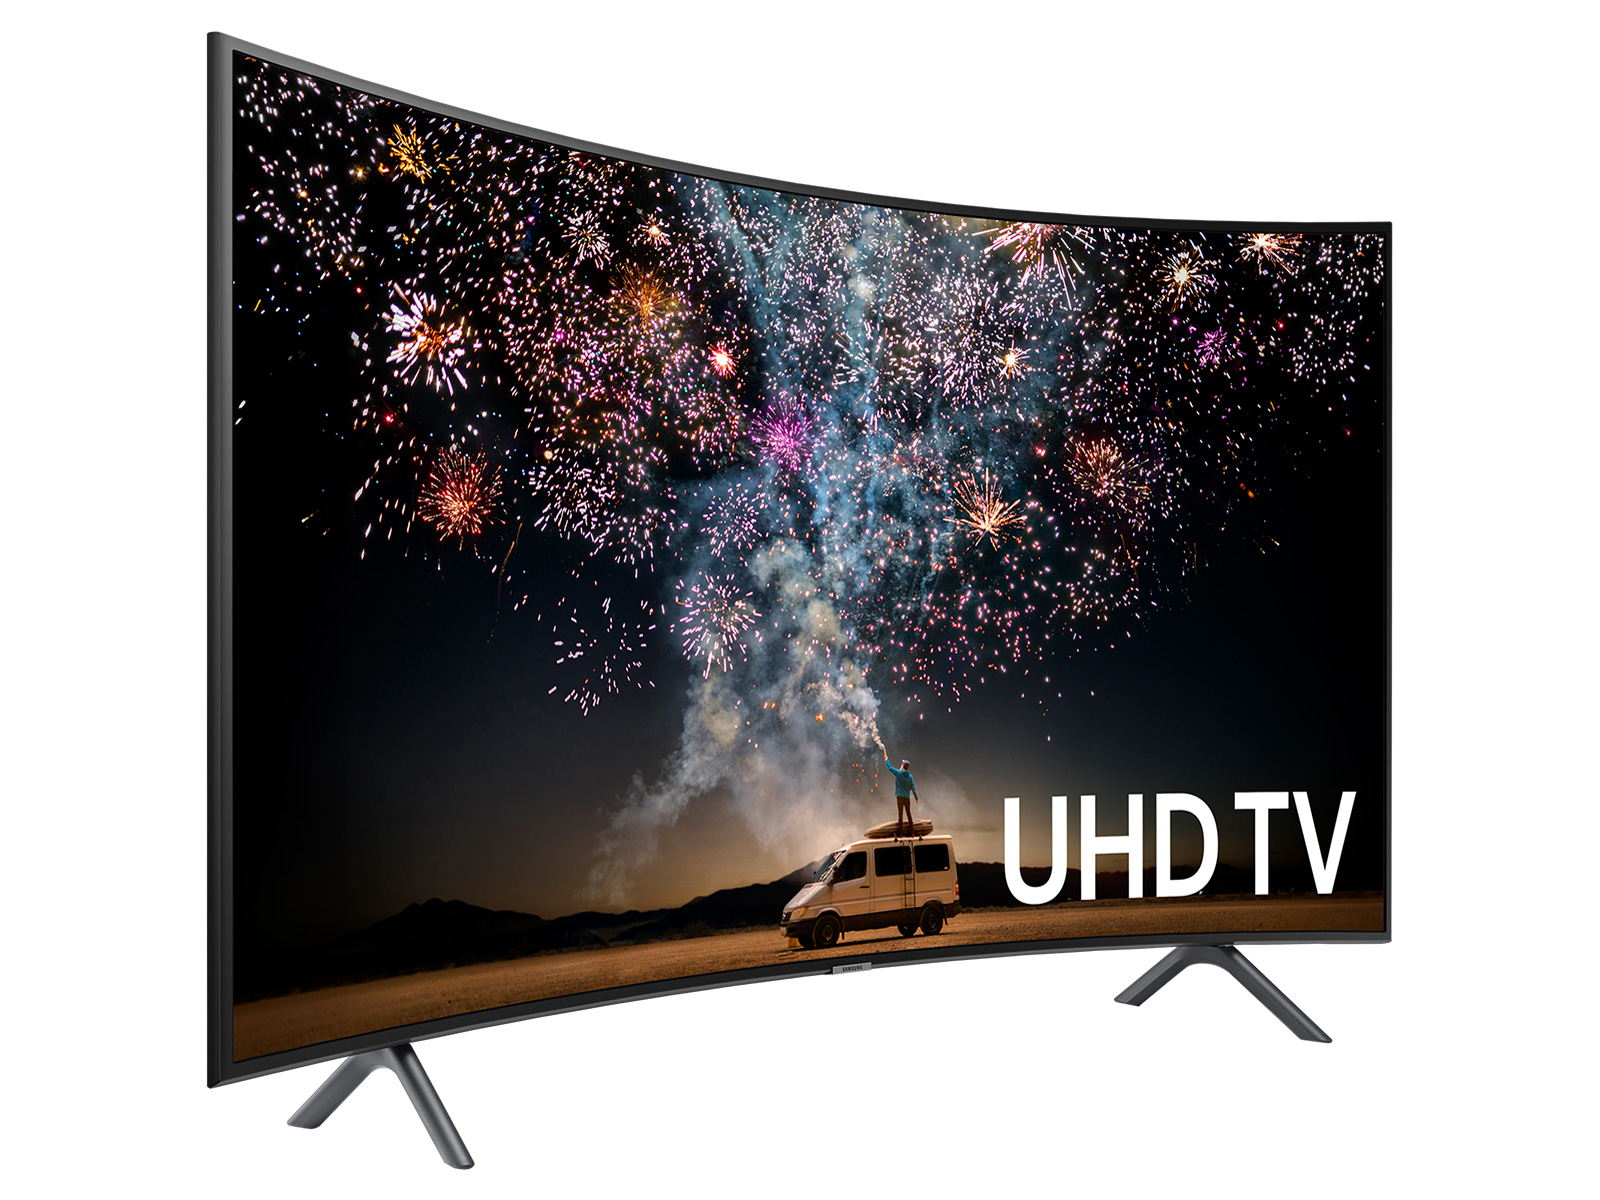 UHD 4K Curved Smart TV RU7300 65 - Specs & Price